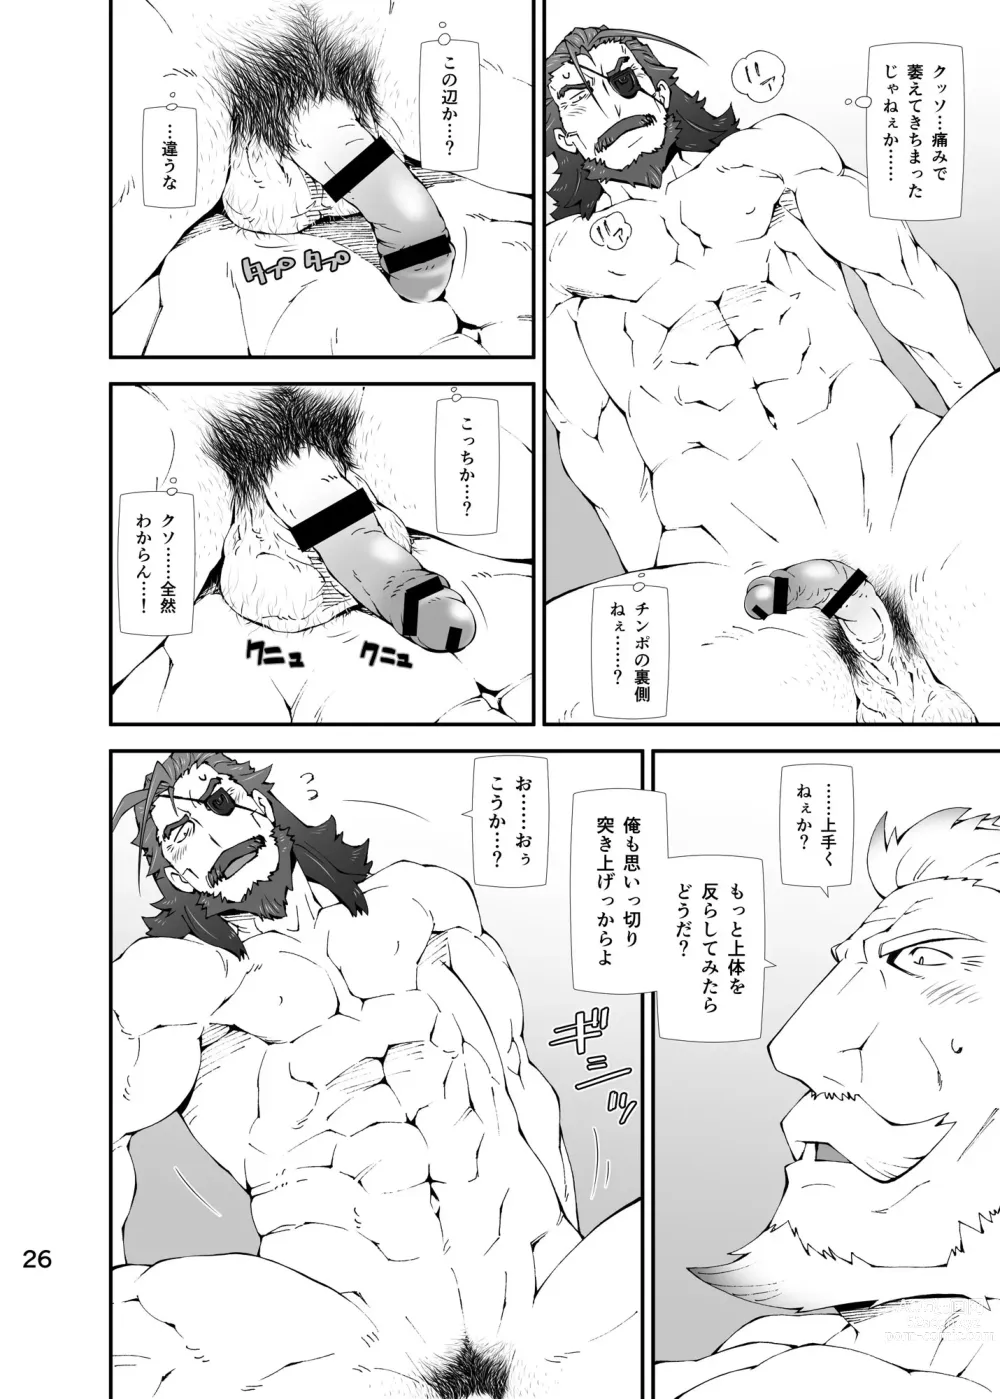 Page 25 of doujinshi GOOD LOVE-RU DARKNESS